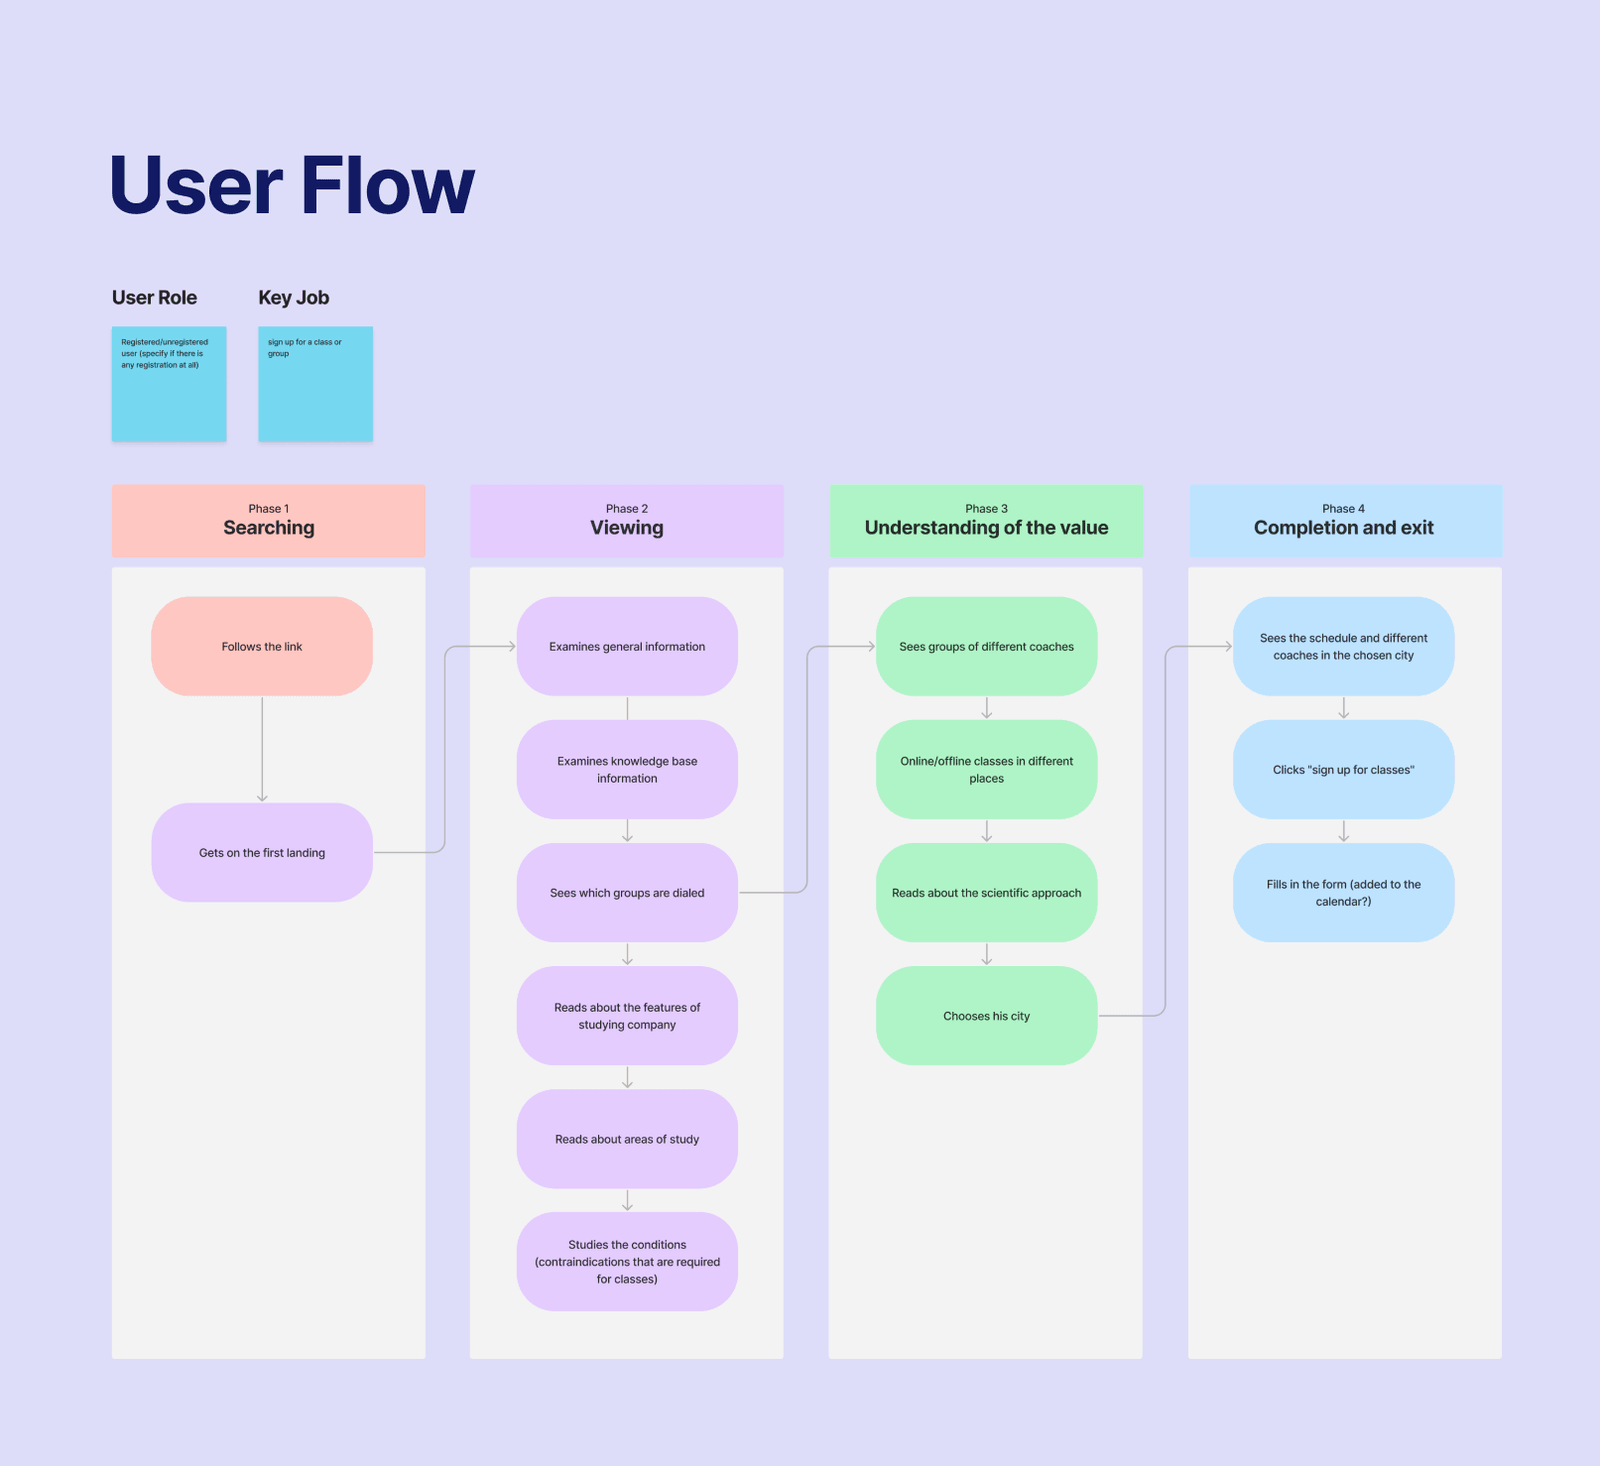 User Flows